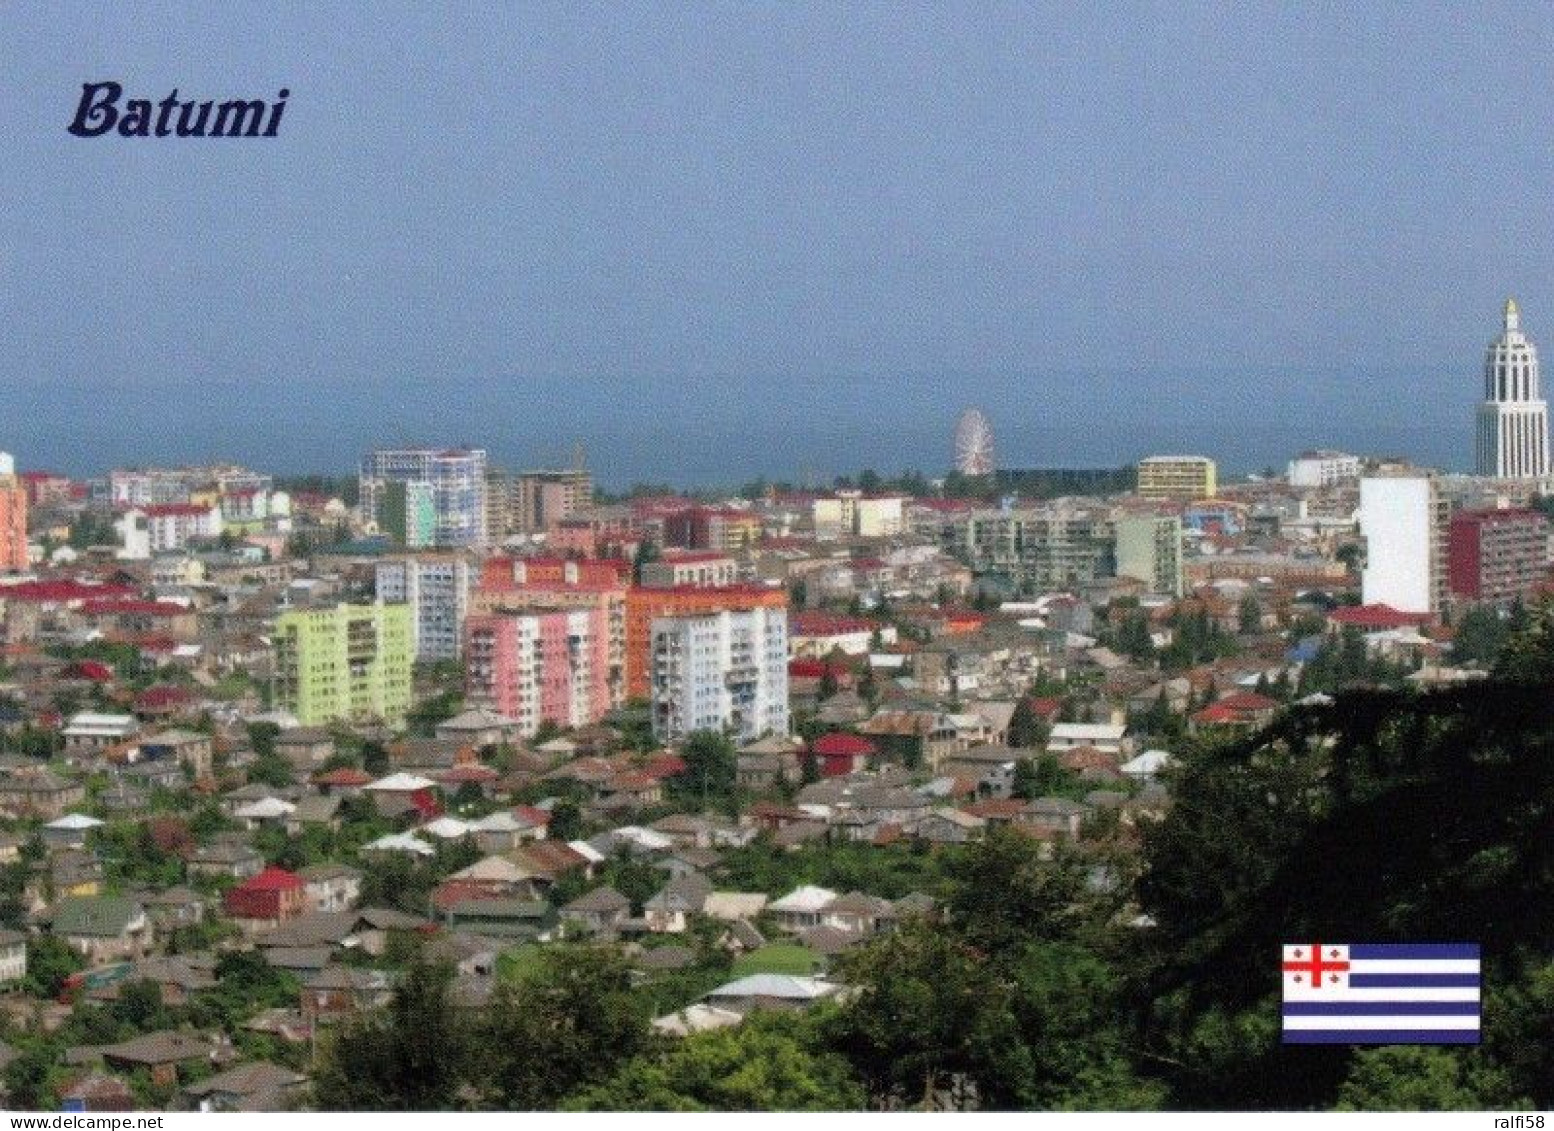 1 AK Adscharien / Autonome Republik In Georgien * Blick Auf Batumi - Luftbildaufnahme Der Hauptstadt Adschariens * - Géorgie